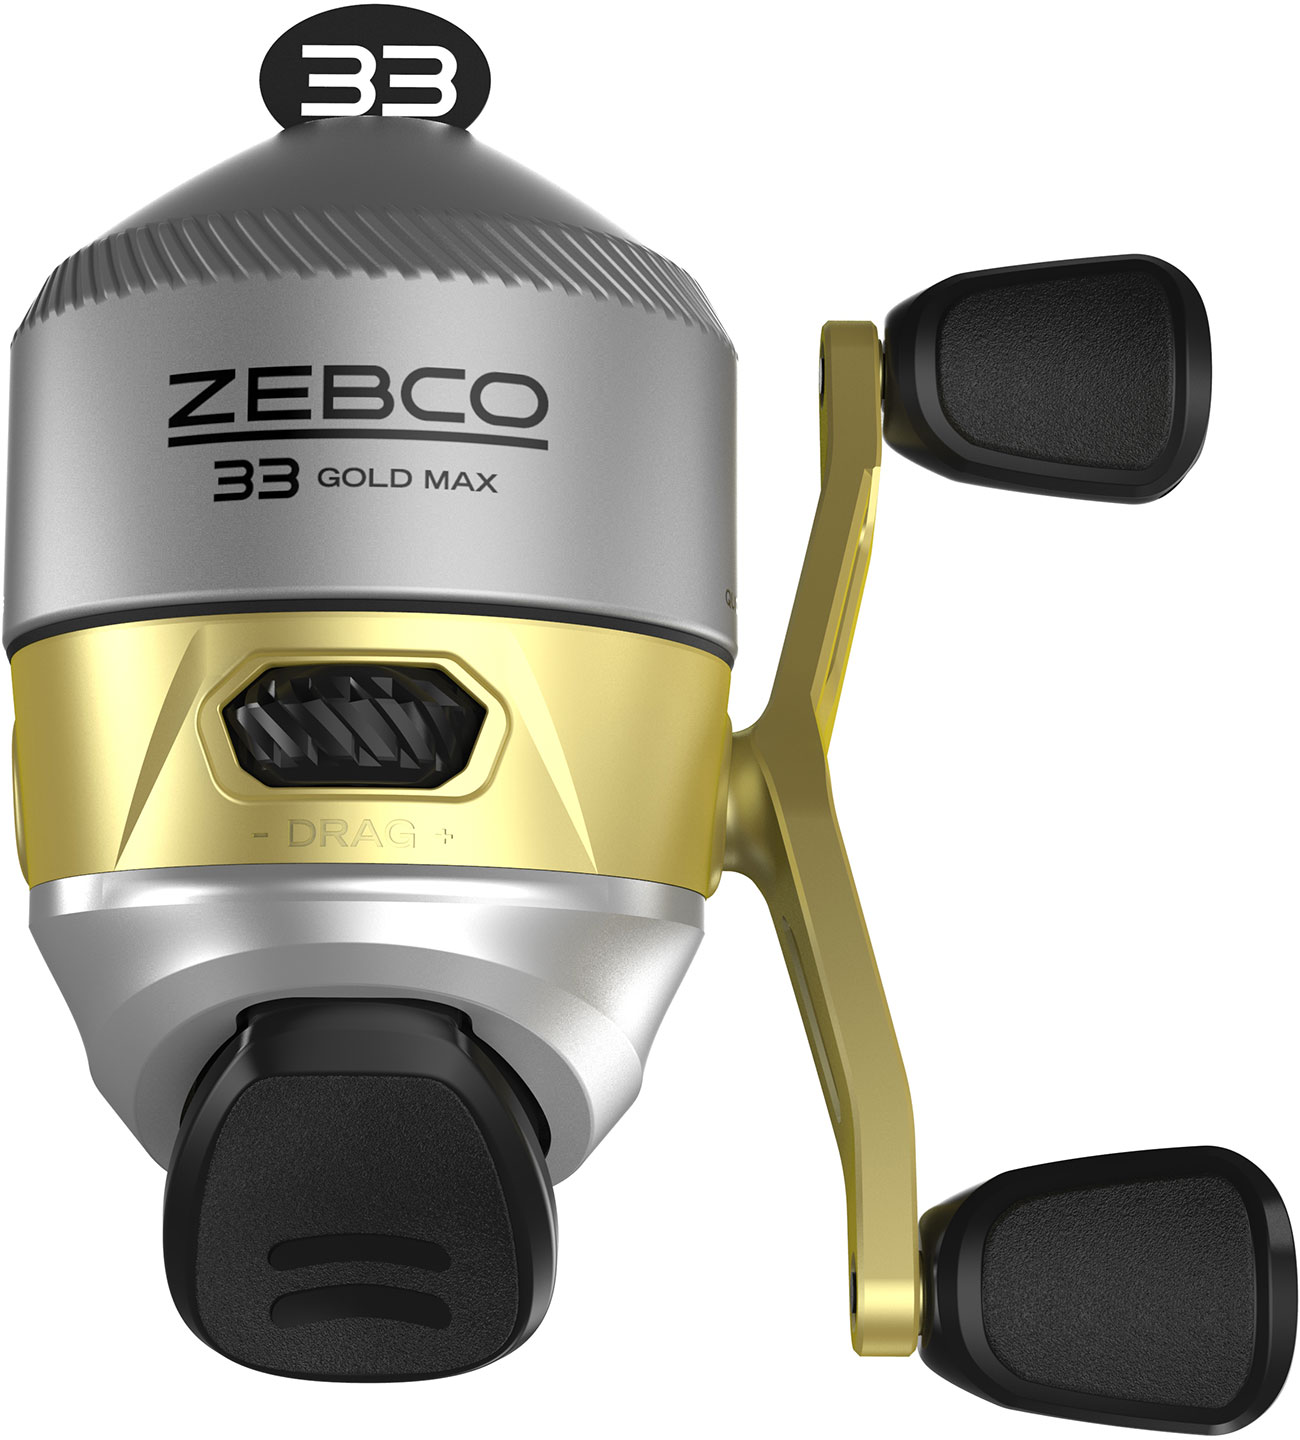 Zebco 33 Max Gold Spincast Reel